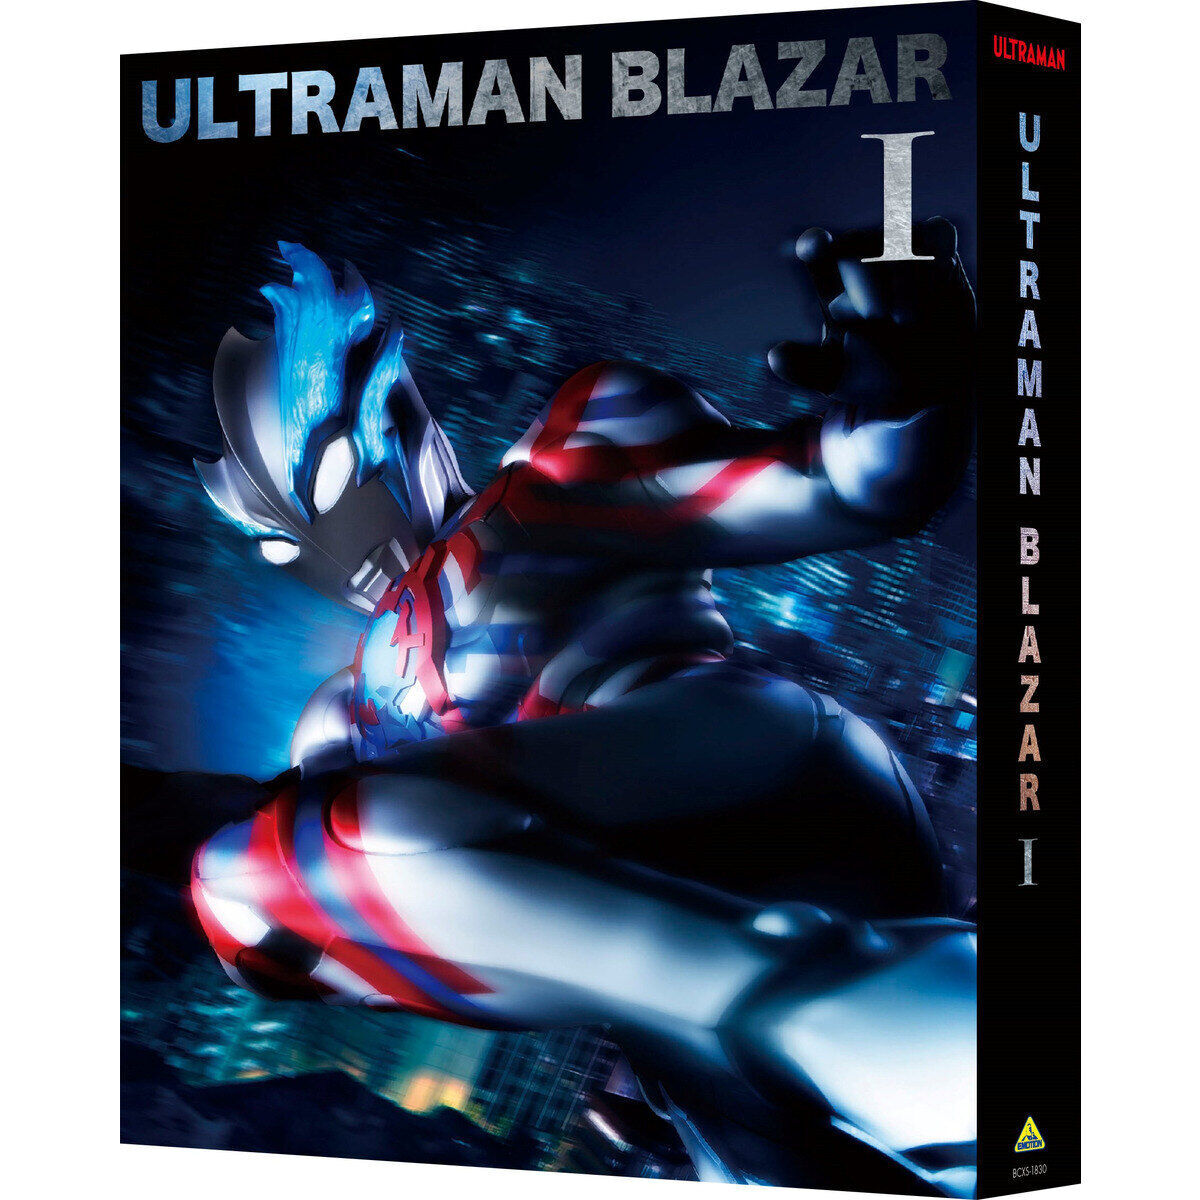 Amazon限定版 ウルトラマンA Blu-rayBOX - DVD/ブルーレイ